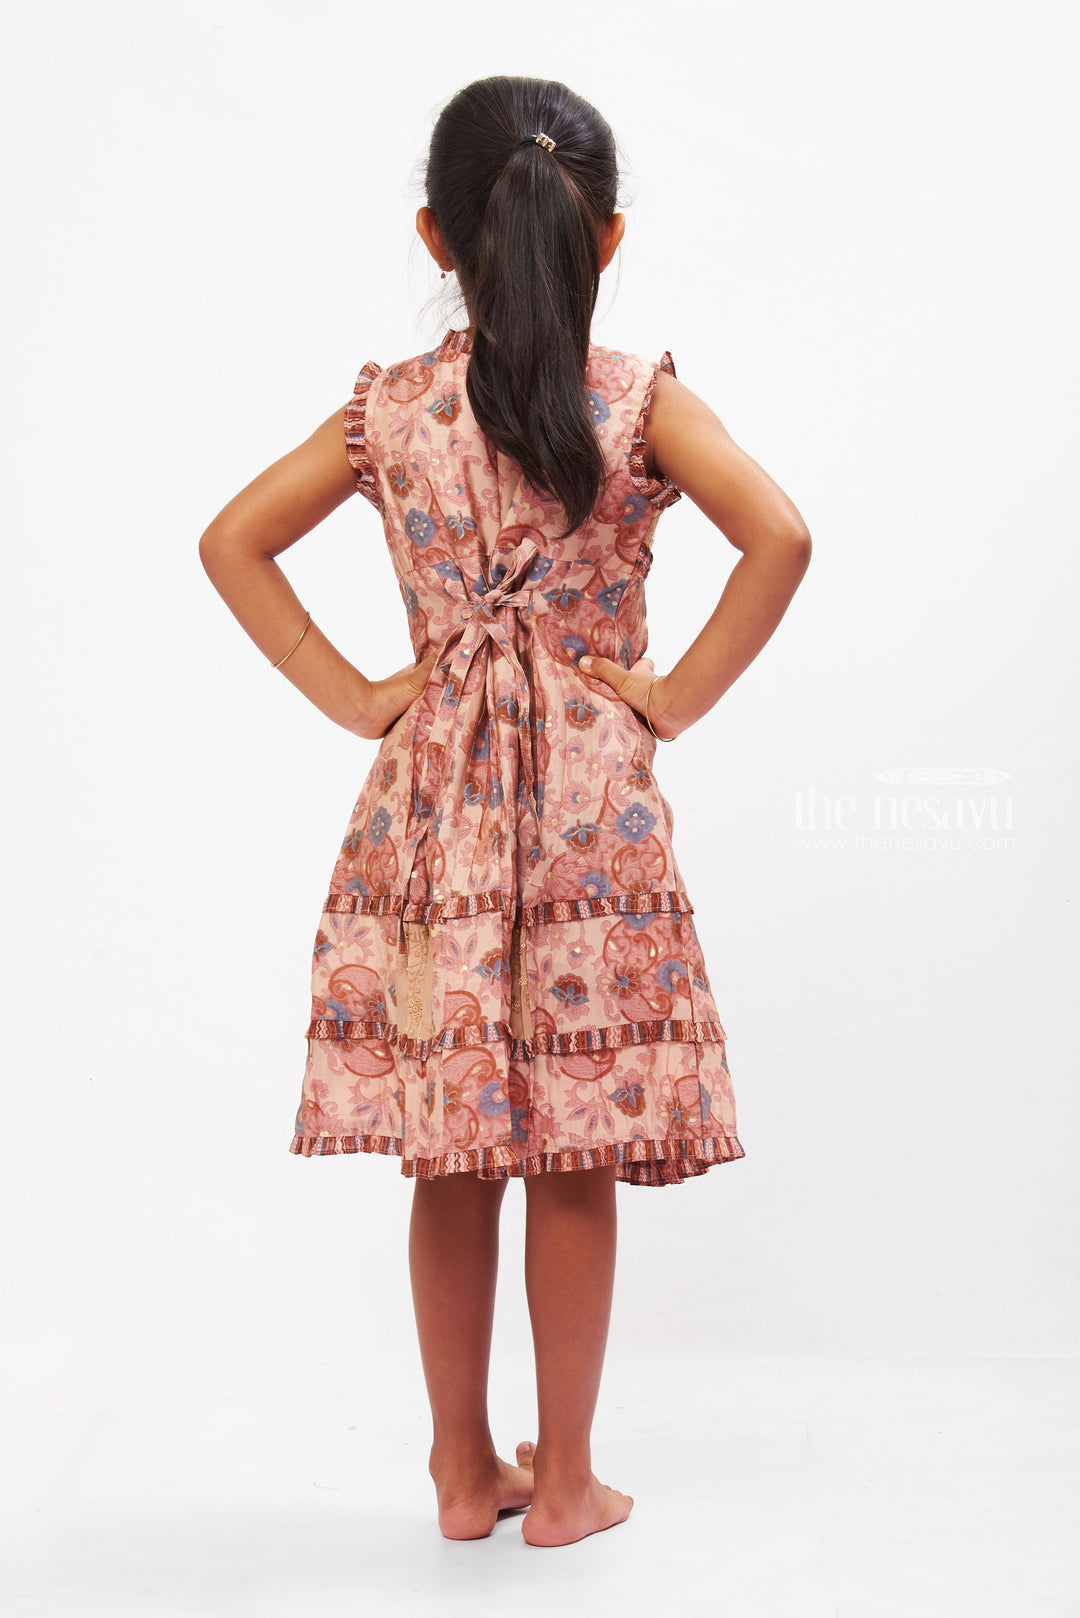 The Nesavu Girls Cotton Frock Sequin-Adorned Cotton Maxi Frock for Girls Nesavu Girls Sequin Cotton Maxi Frock | Elegant Traditional Summer Dress | The Nesavu